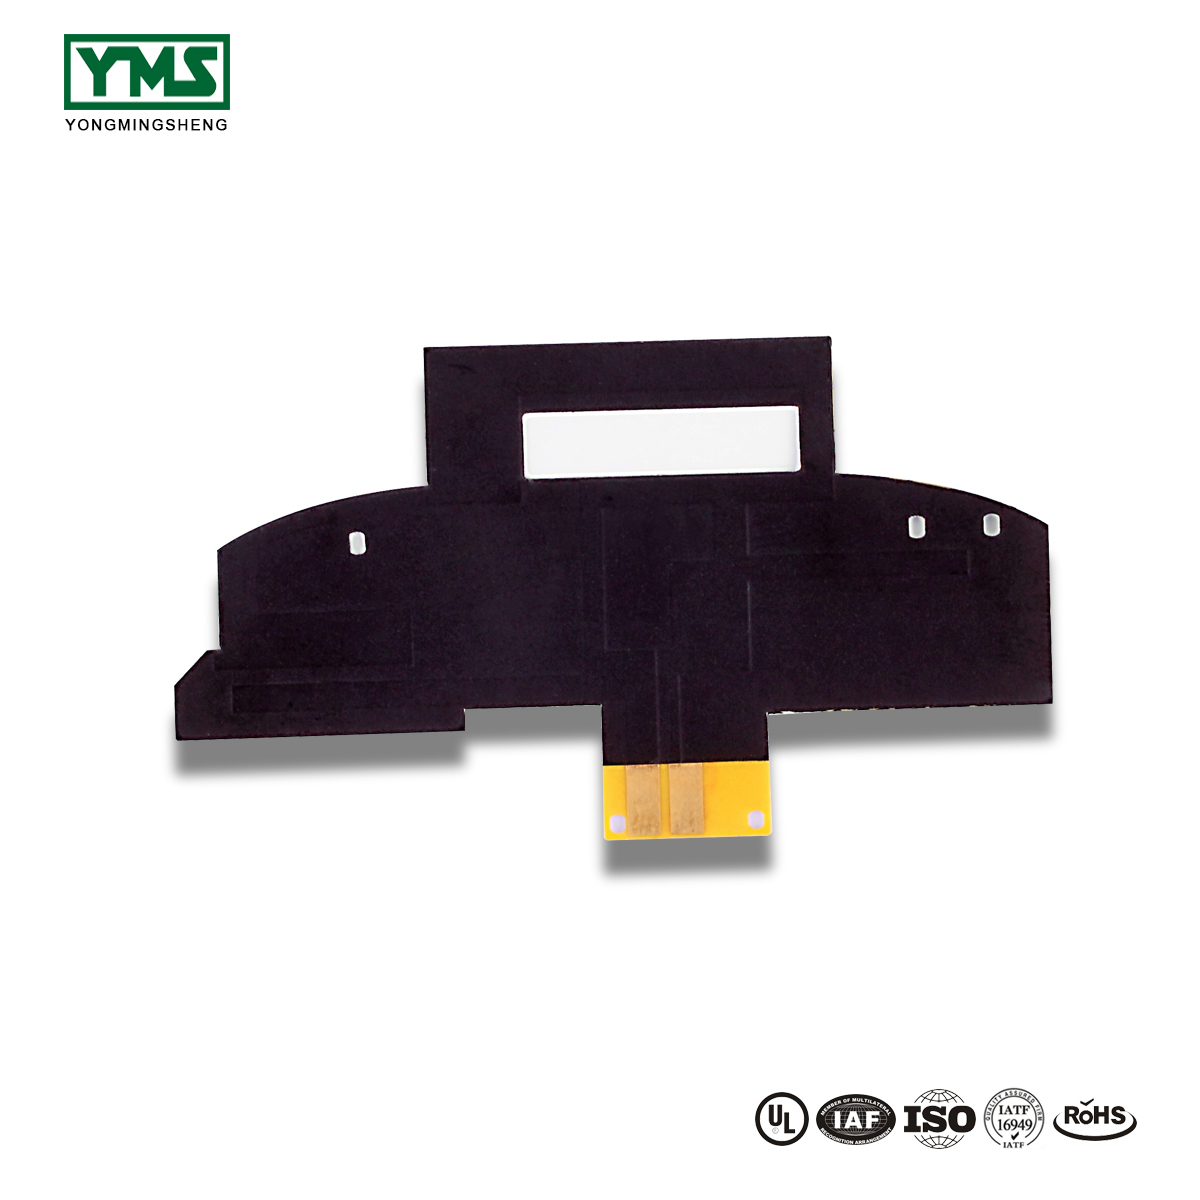 Manufactur standard Multi-Species Pcb - 1layer  Cem-3 Stiffener flexible board | YMSPCB – Yongmingsheng